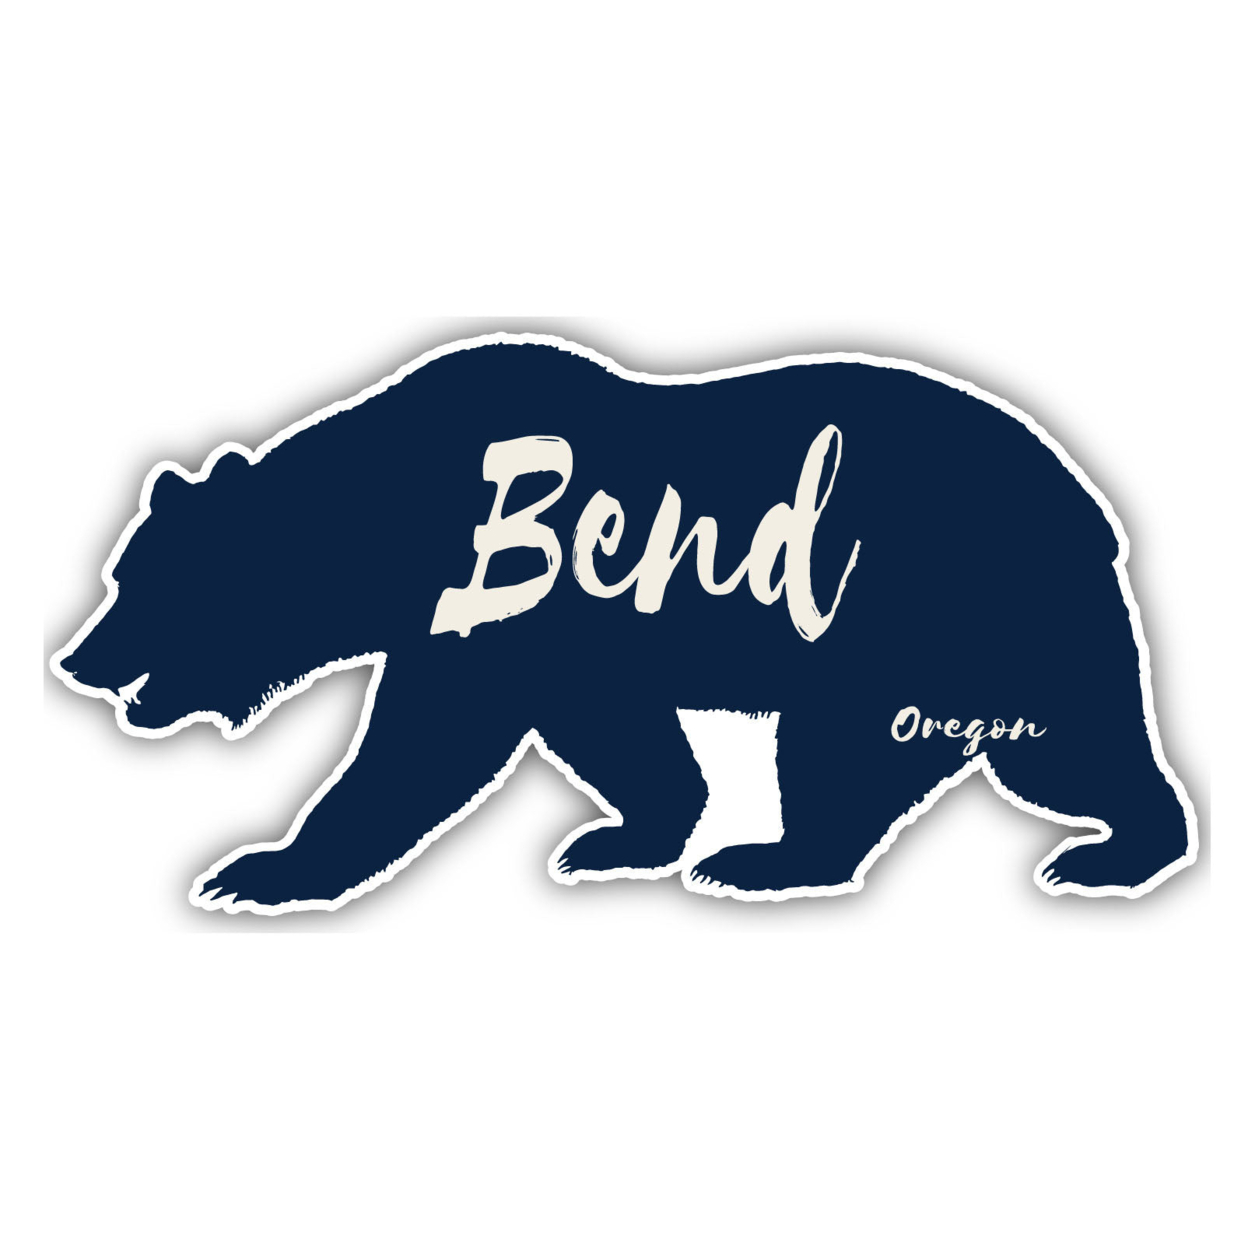 Bend Oregon Souvenir Decorative Stickers (Choose Theme And Size) - 4-Pack, 4-Inch, Bear